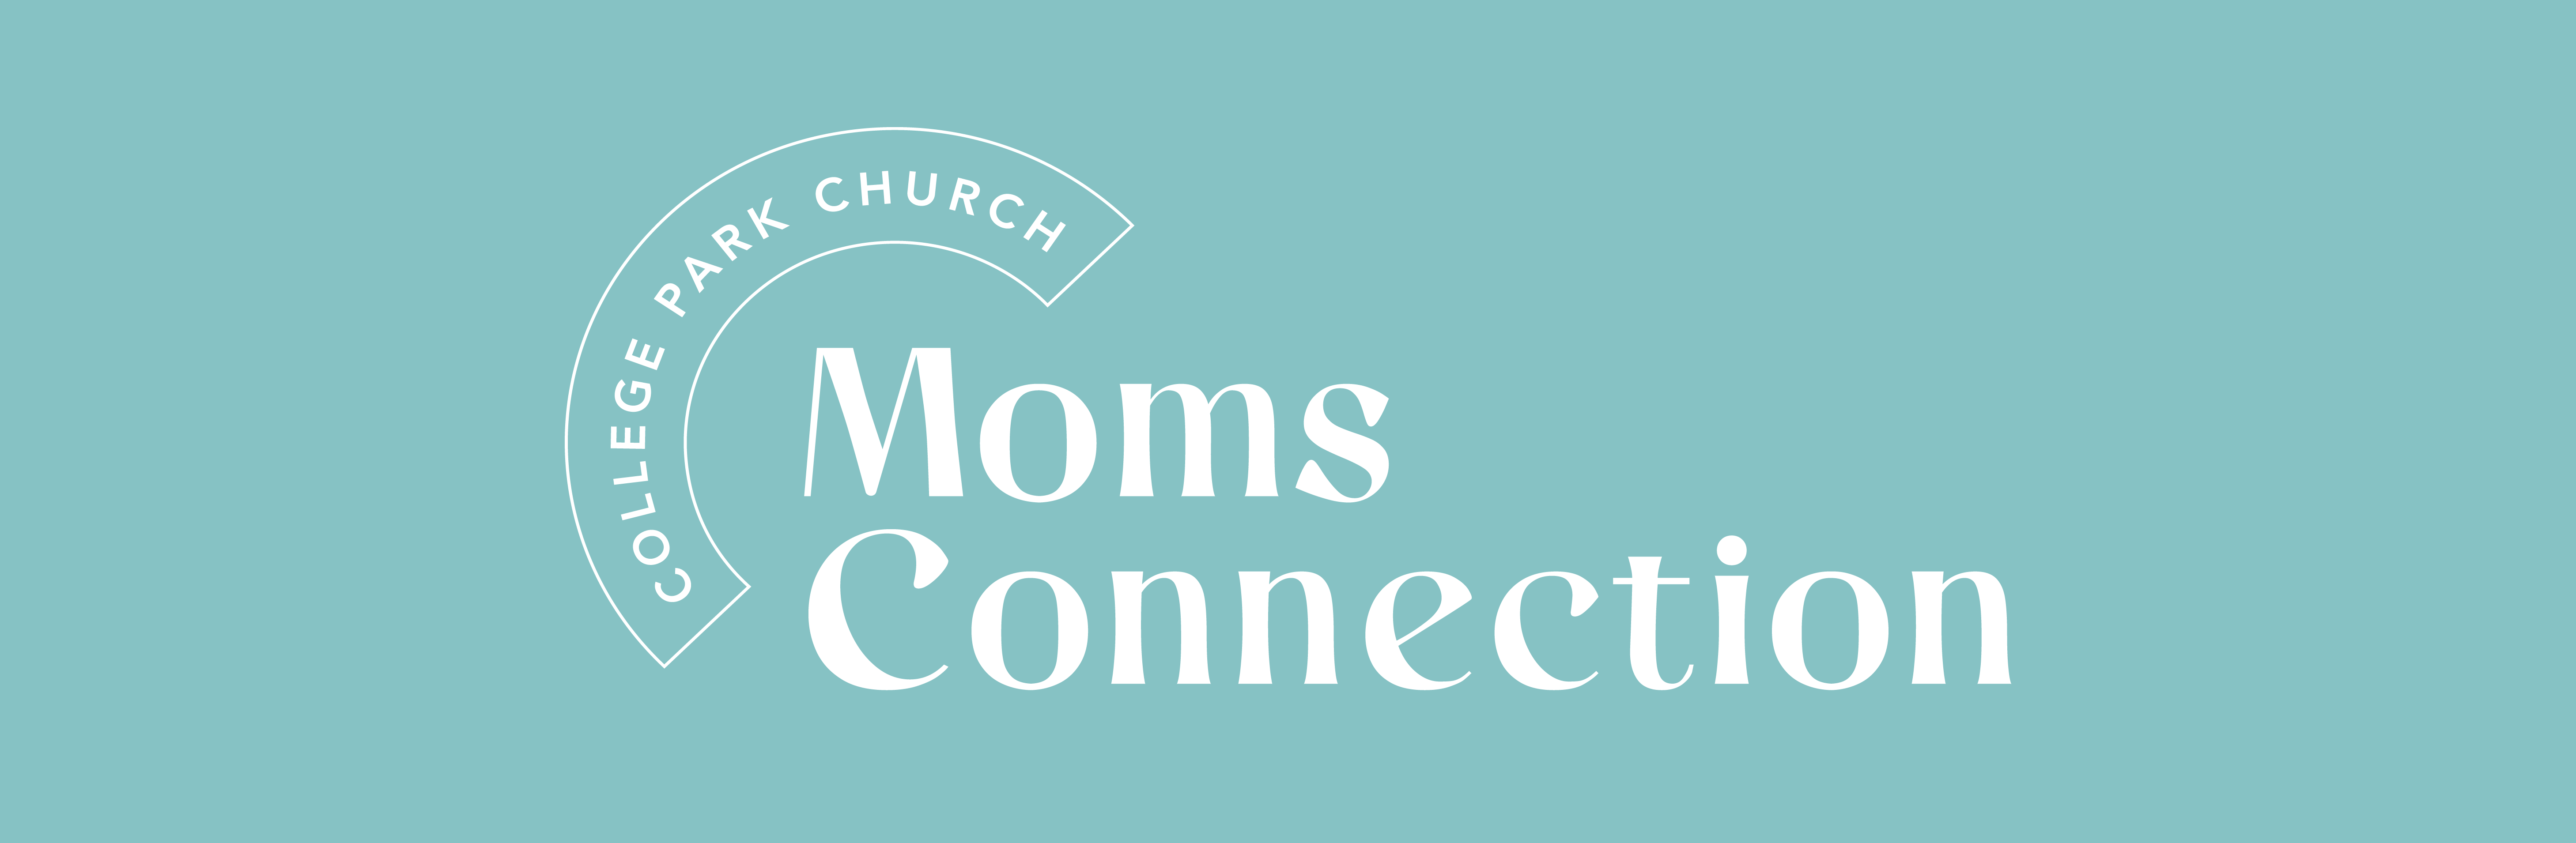 Moms Connection Registration